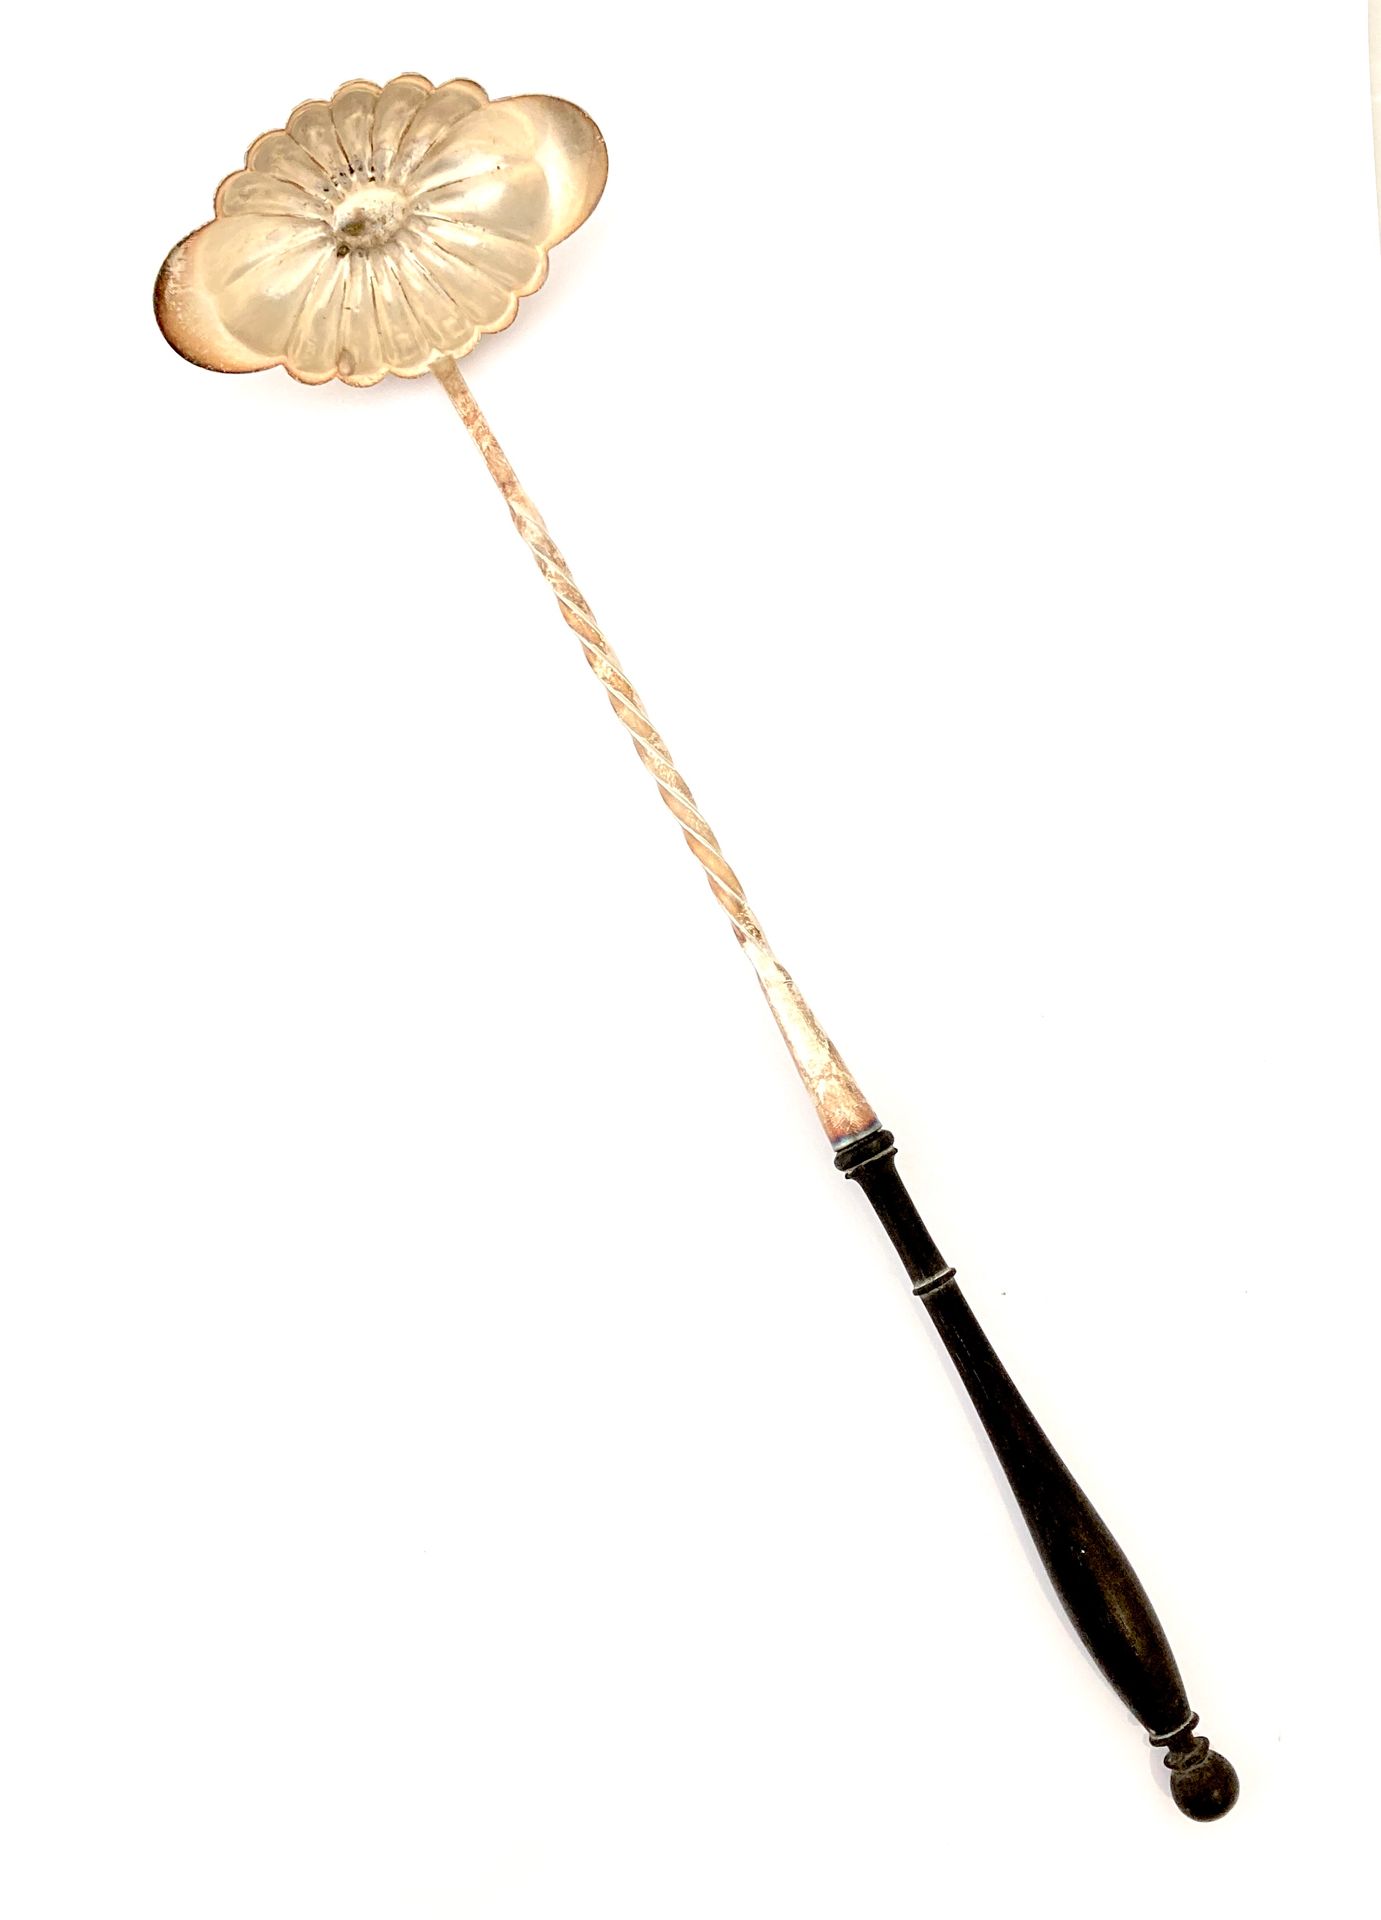 Null 姬斯多福（CHRISTOFLE）

冲孔勺

镀银金属

勺子是梭形的，有神龙的装饰，柄部的躯干结束于一个翻转的发黑的木头夹。

长36.5厘米。